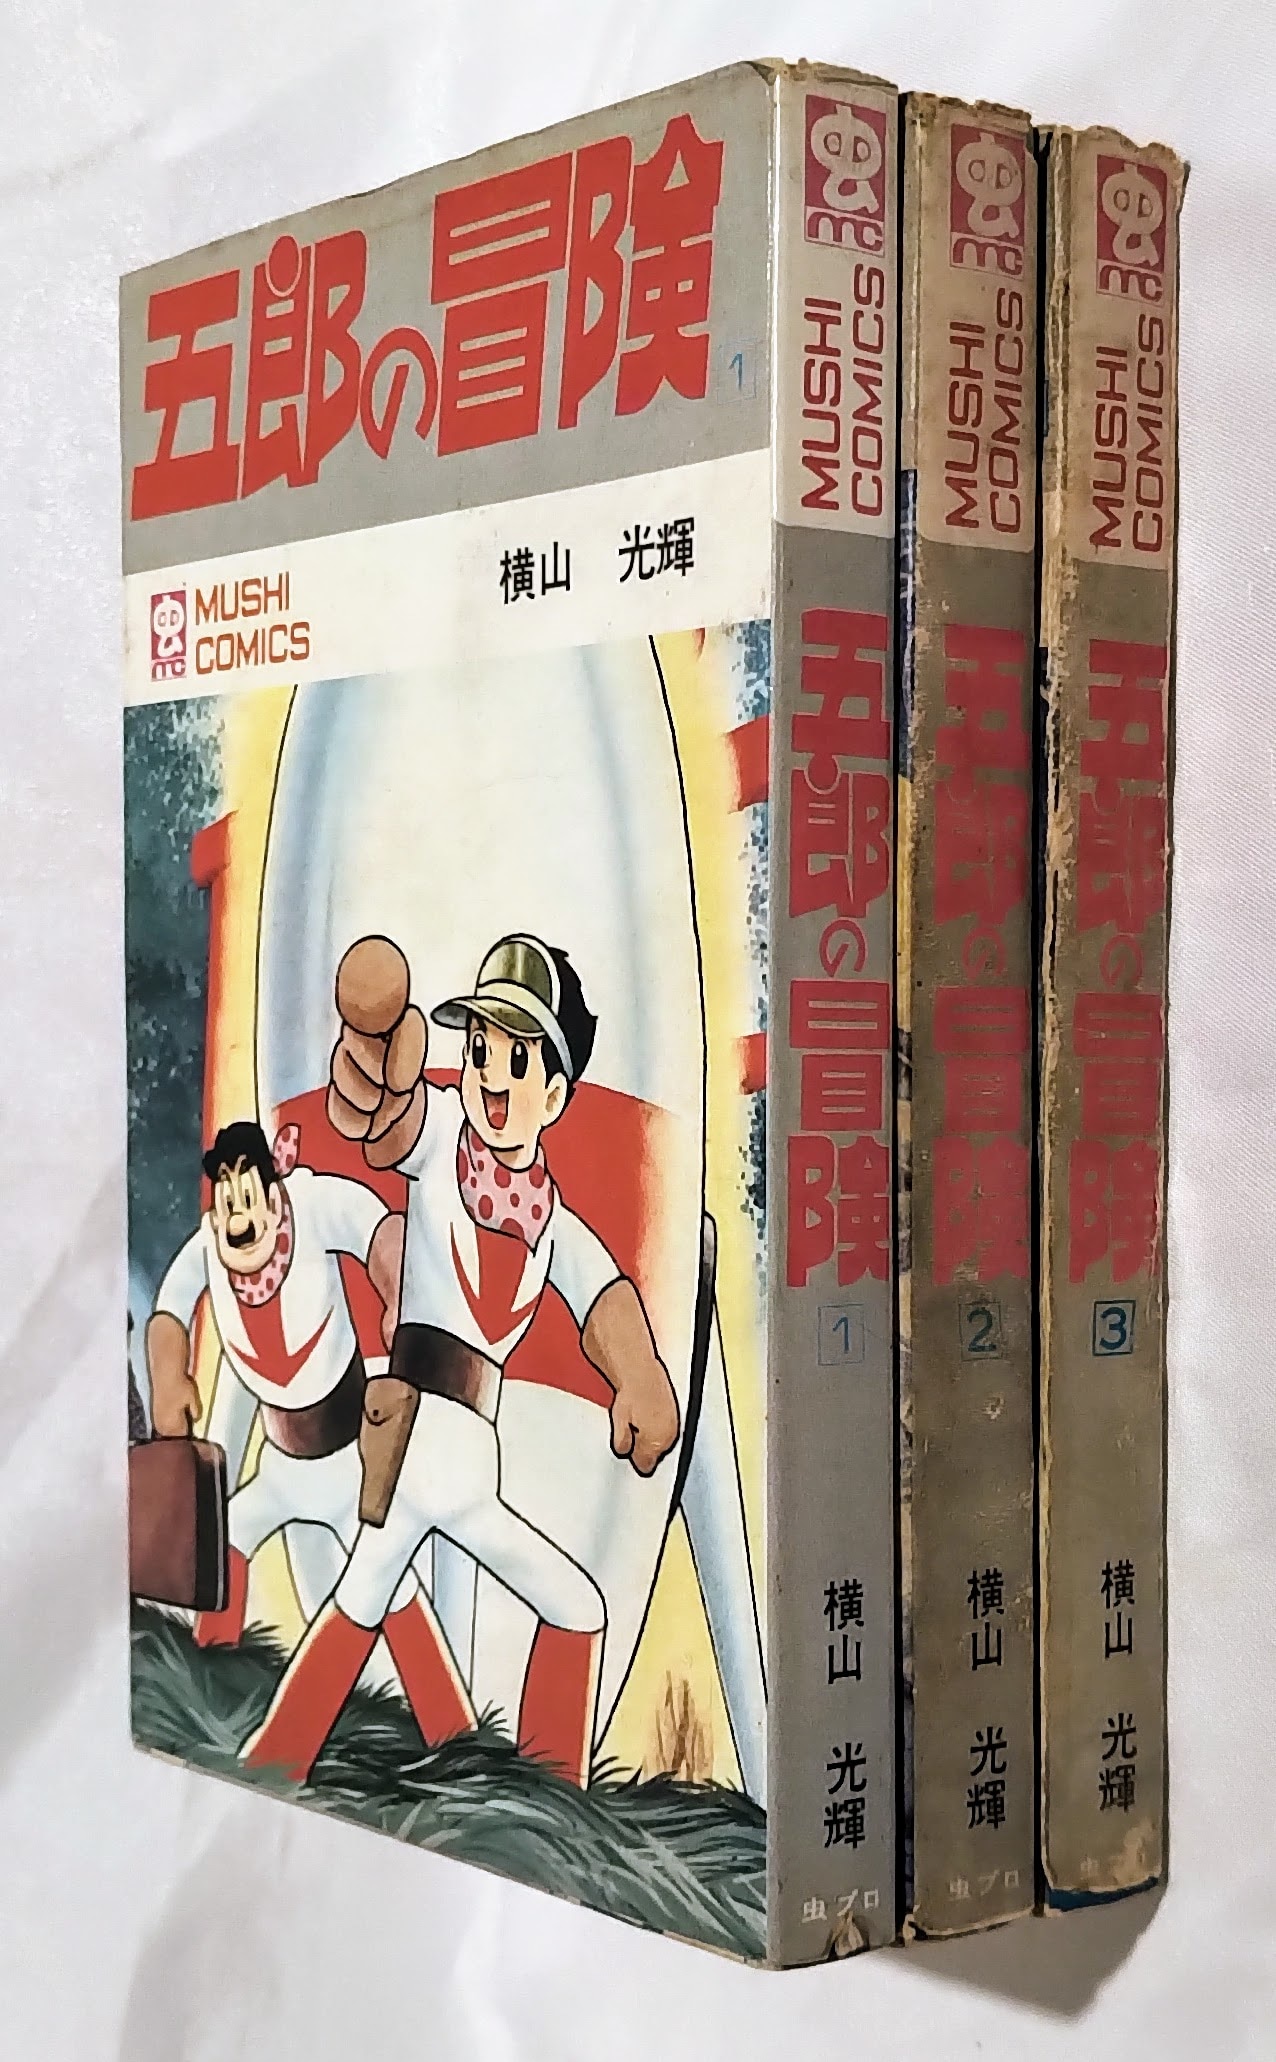 虫プロ 五郎の冒険 全3巻 初版 横山光輝-